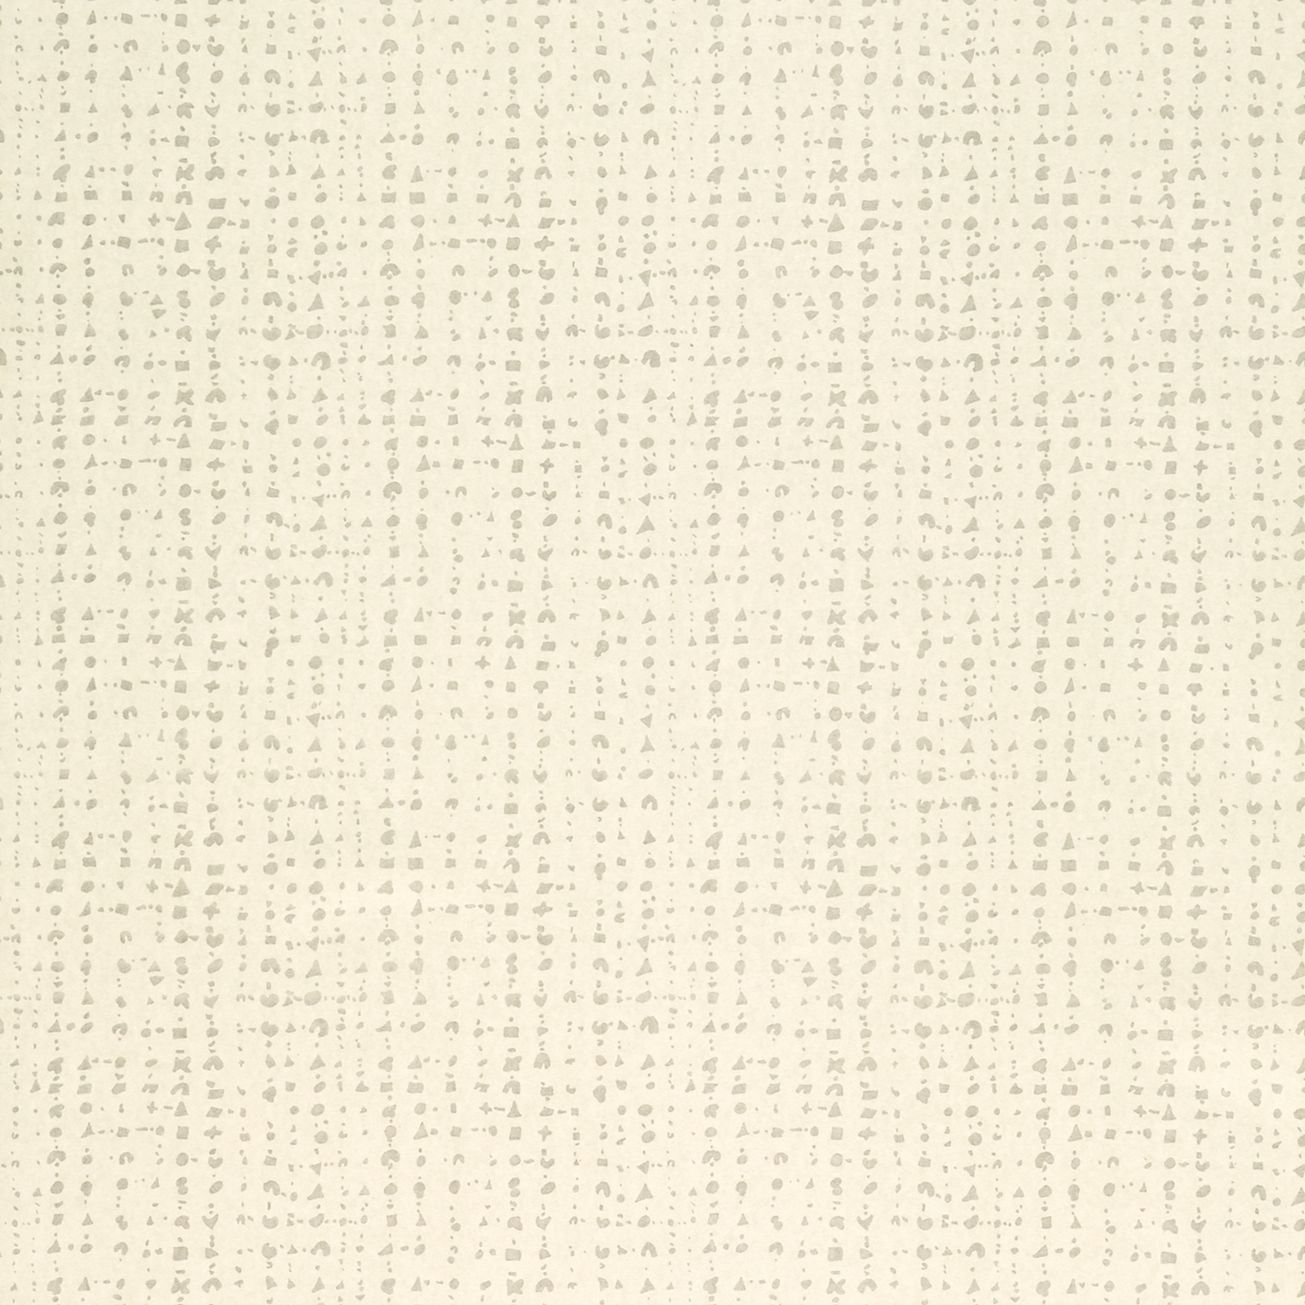 Displaying Image For 1950s Wallpaper Patterns